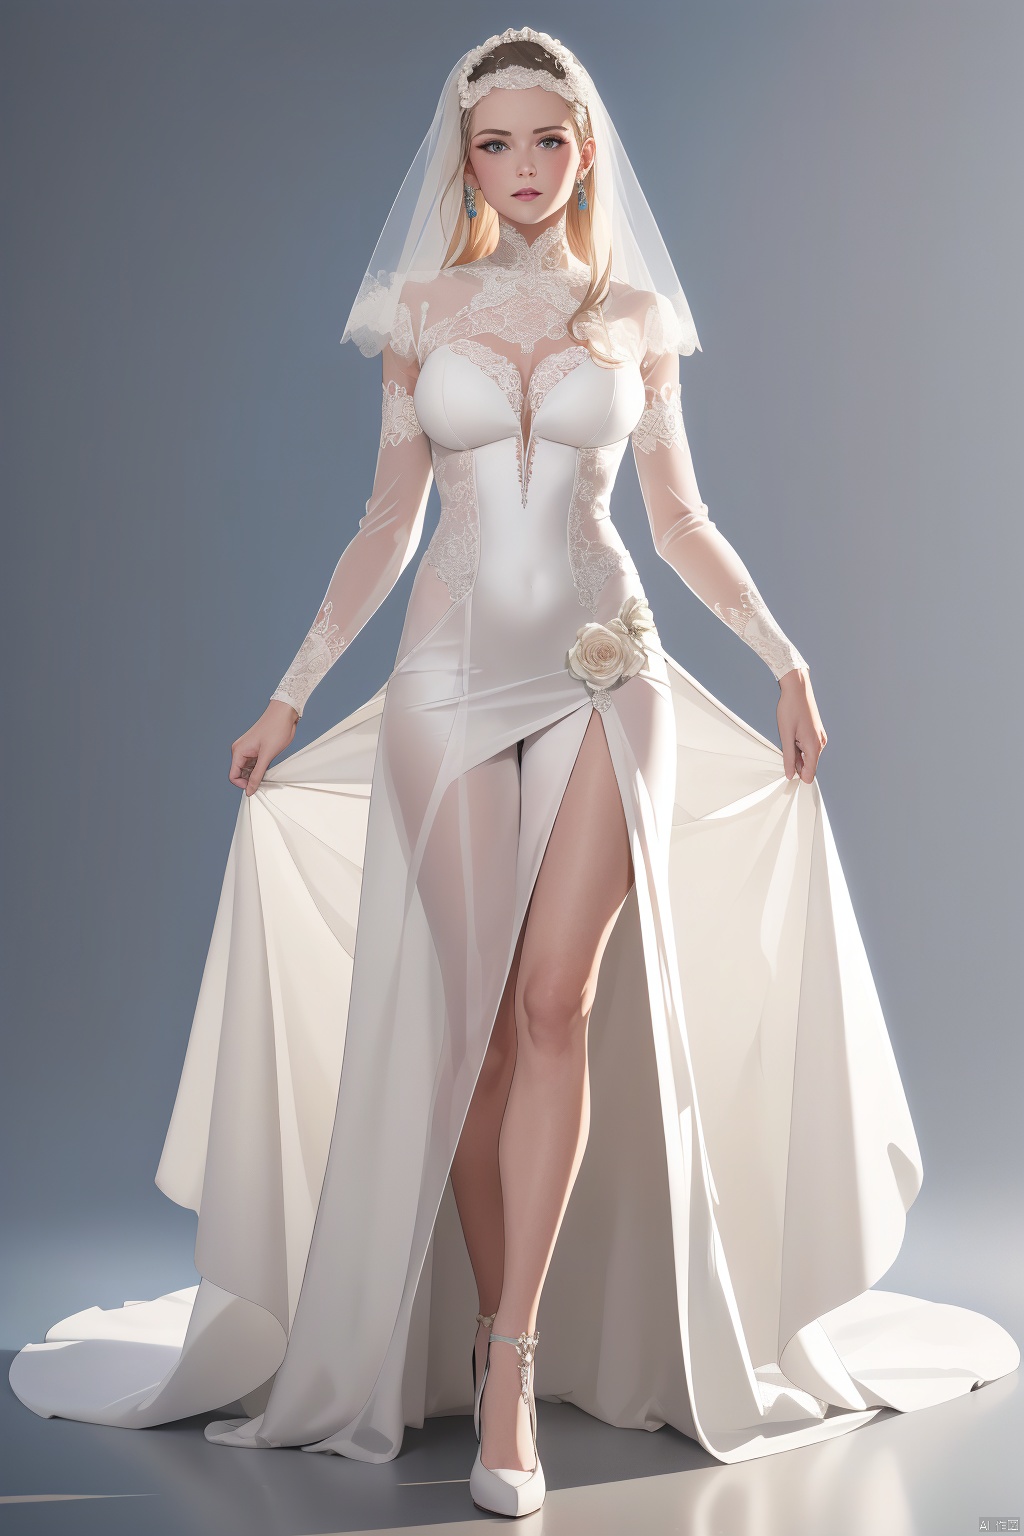  lucy \(cyberpunk\),1girl,wedding dress,see-through,walking,realistic,simple background,